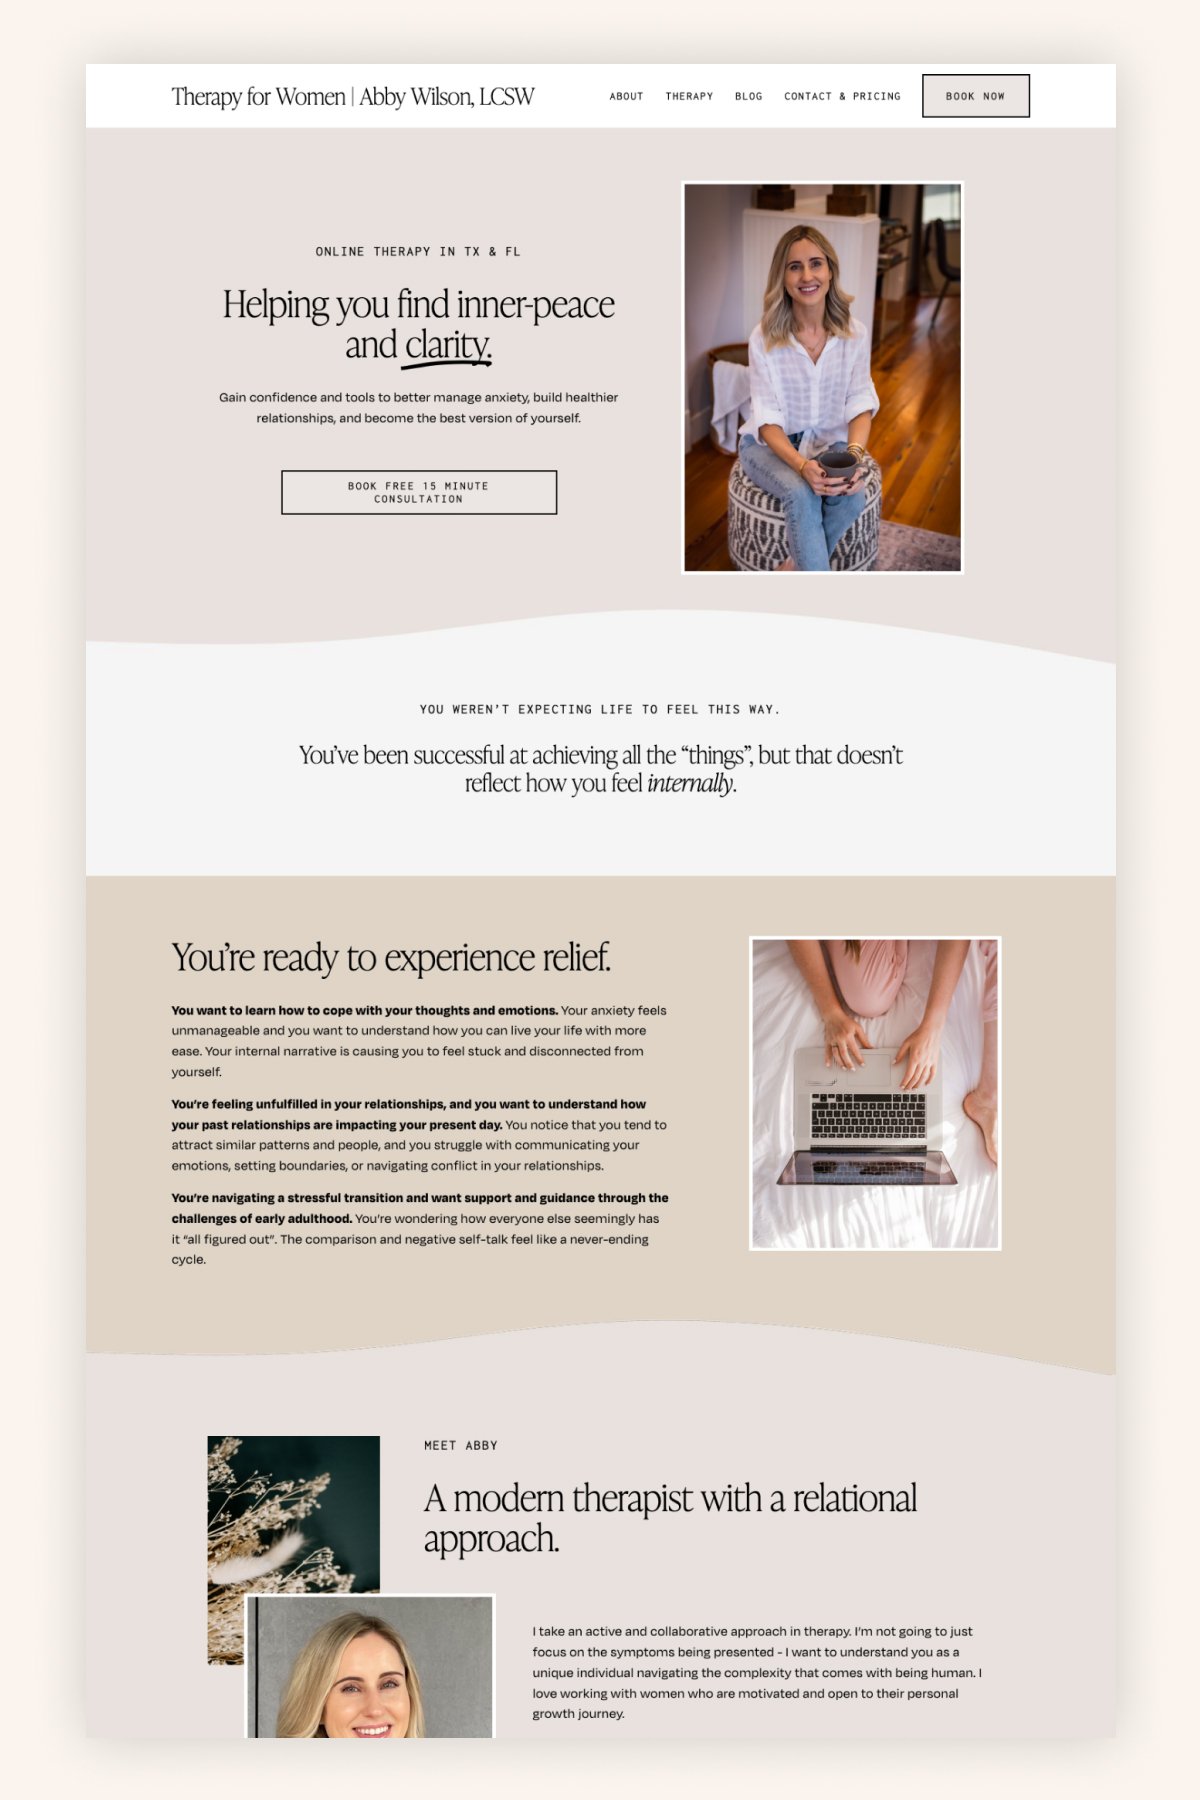 How to Make a Stunning Squarespace Portfolio Website — Applet Studio